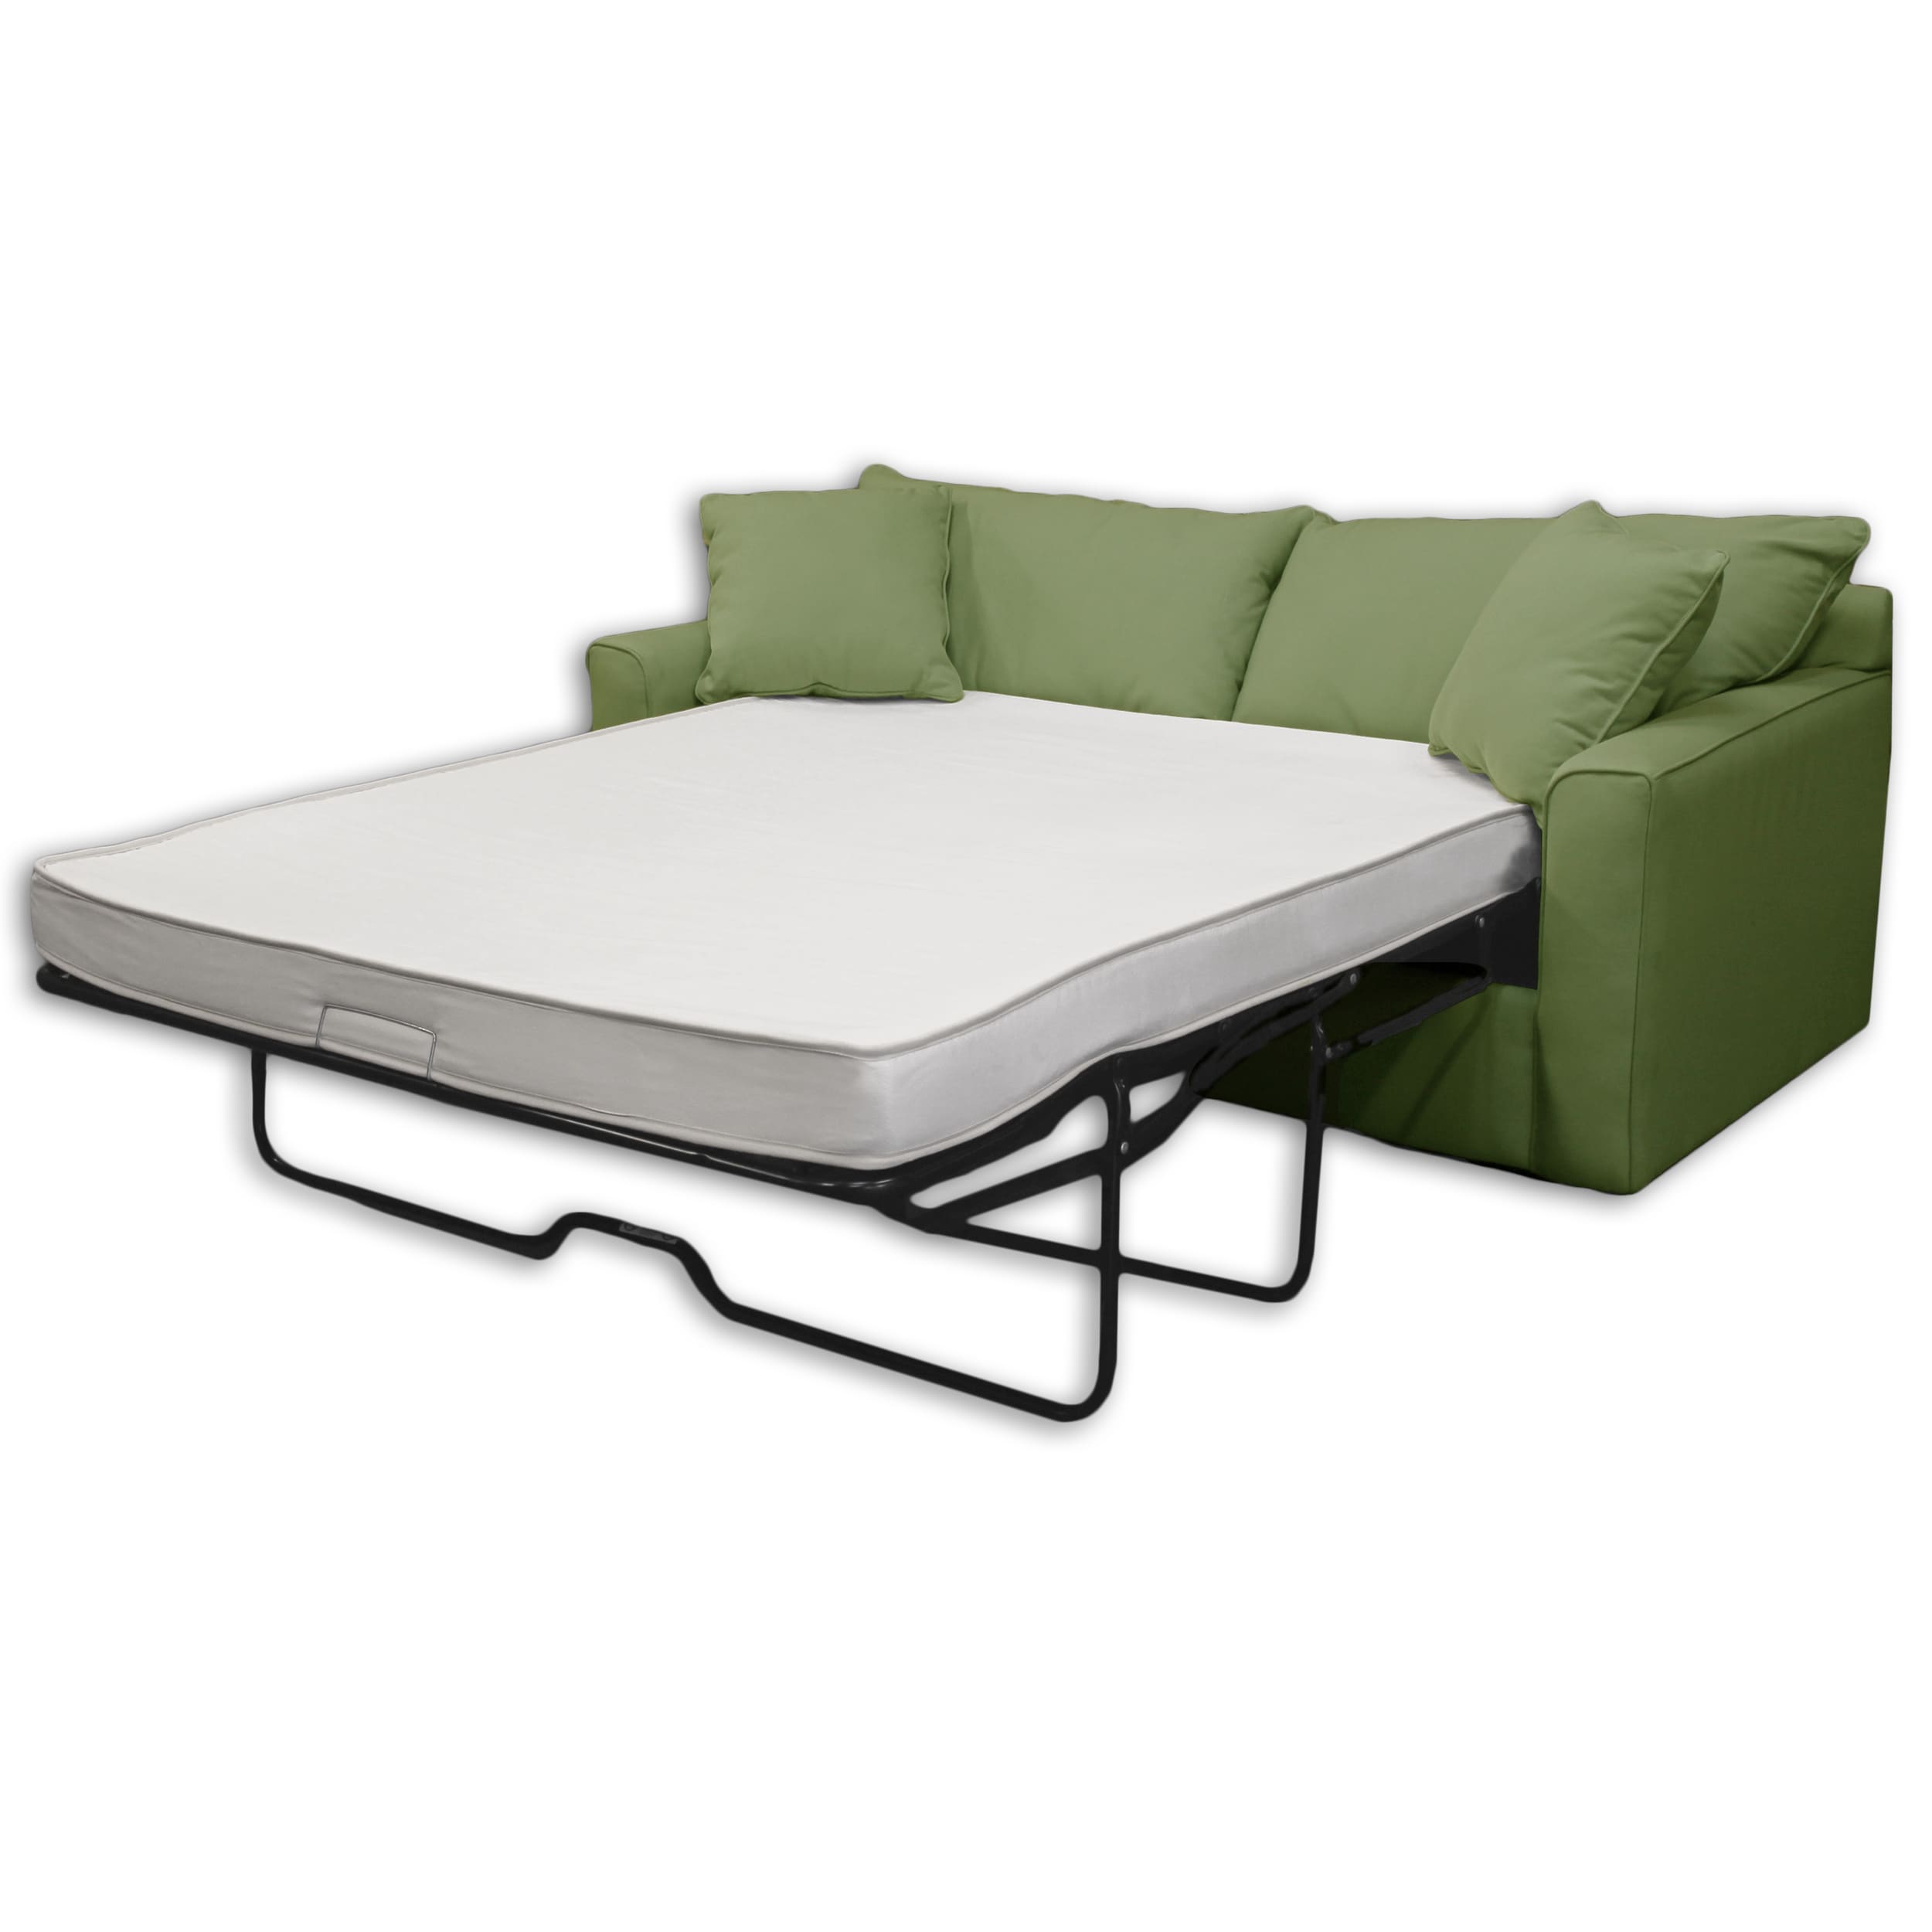 Select Luxury Reversible 4 Inch Full Size Foam Sofa Bed Sleeper Mattress 0b0db123 3652 4056 810d 3ff4825e6bb3 